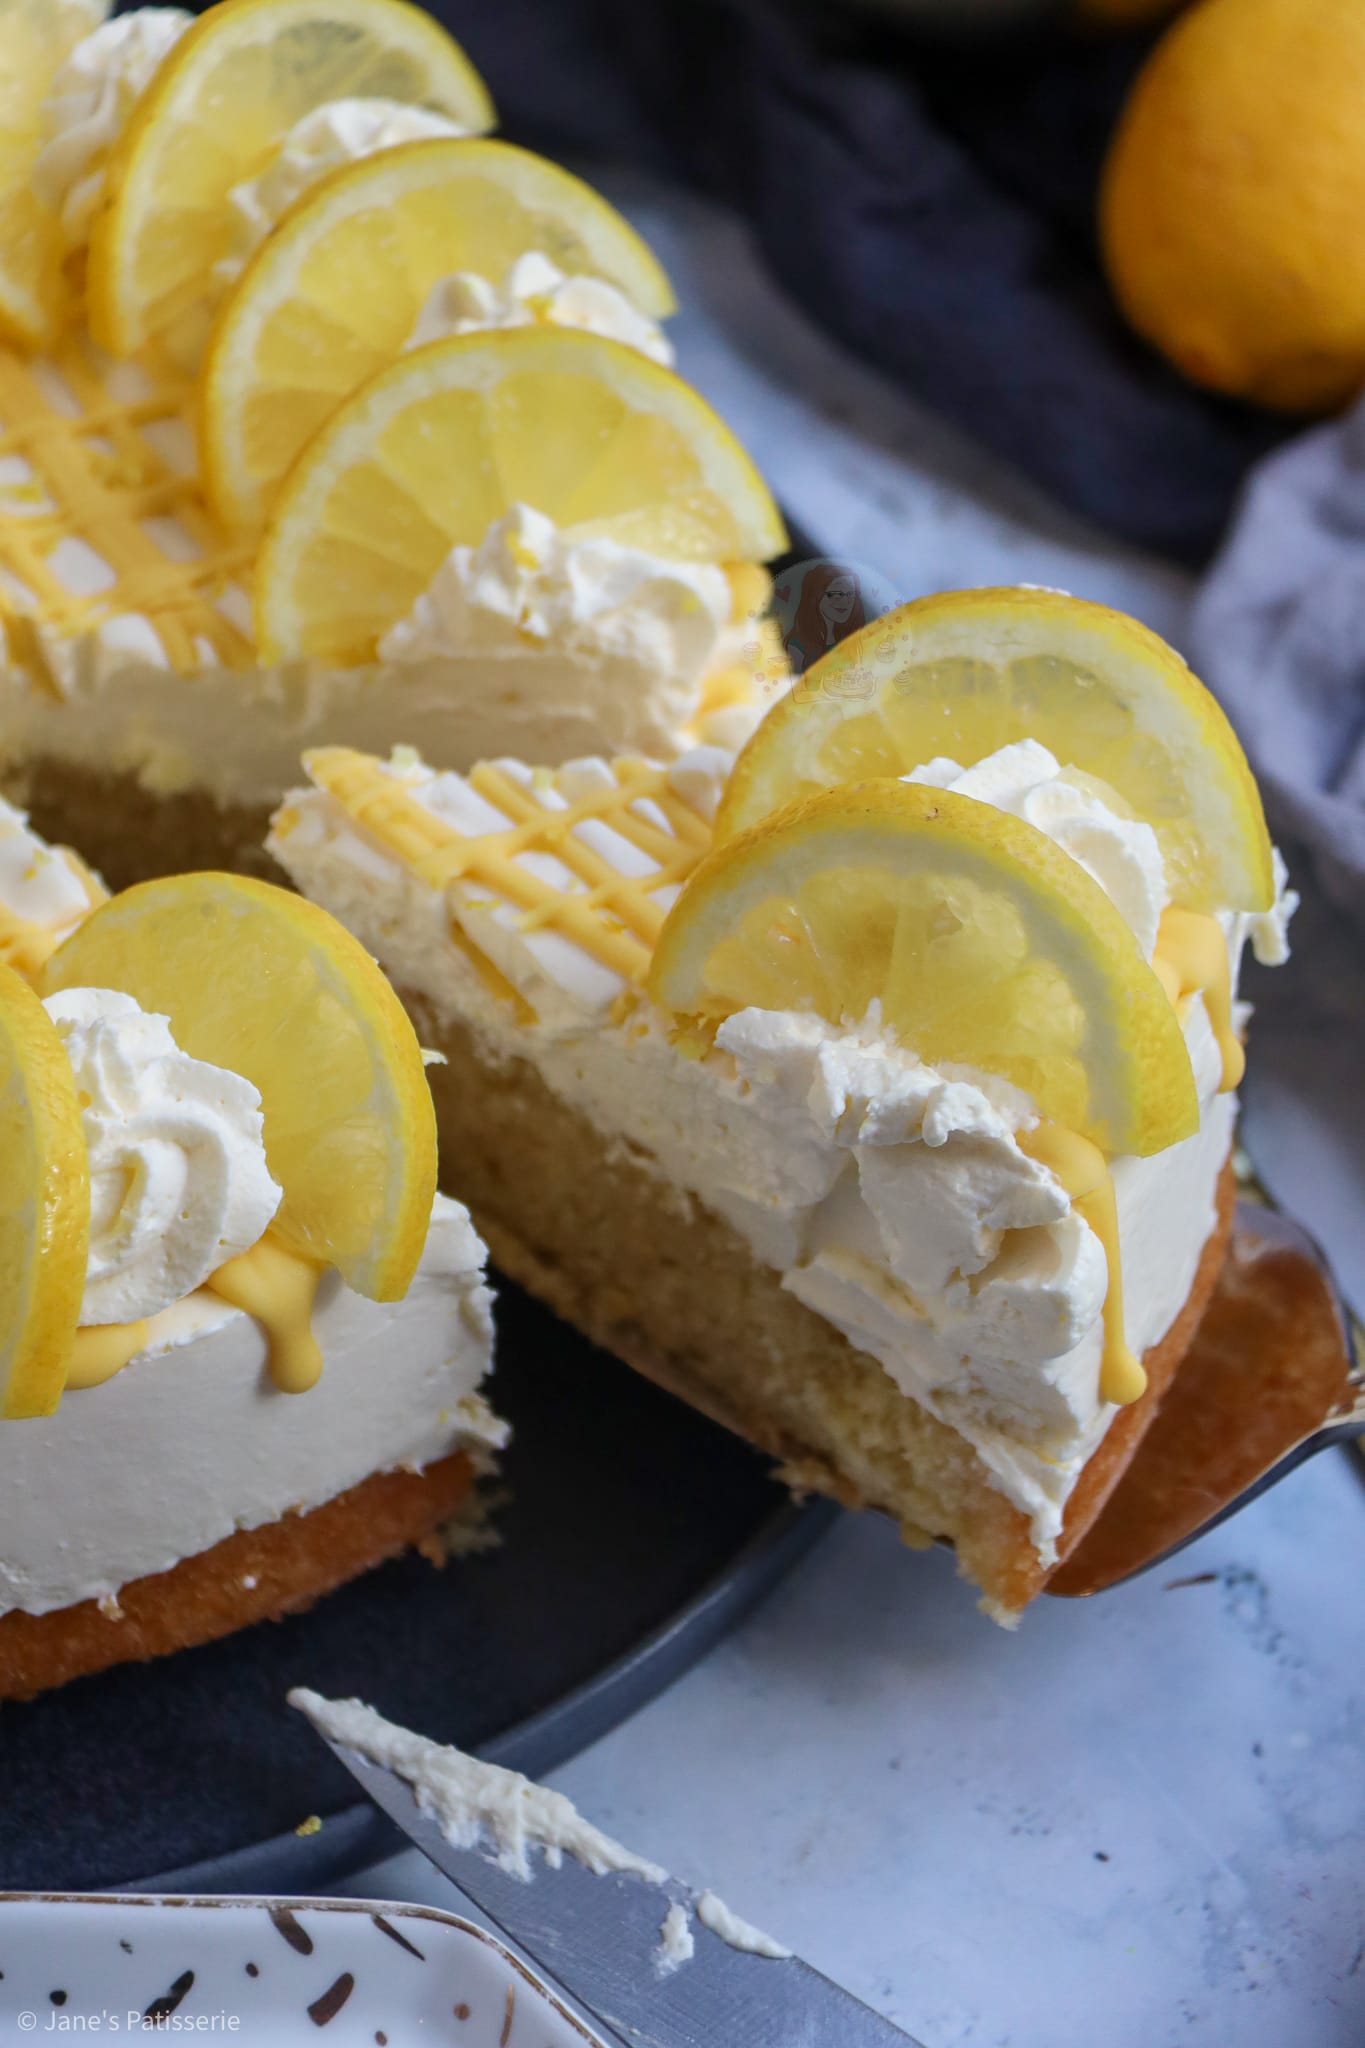 Lemon Drizzle Cheesecake! - Jane's Patisserie